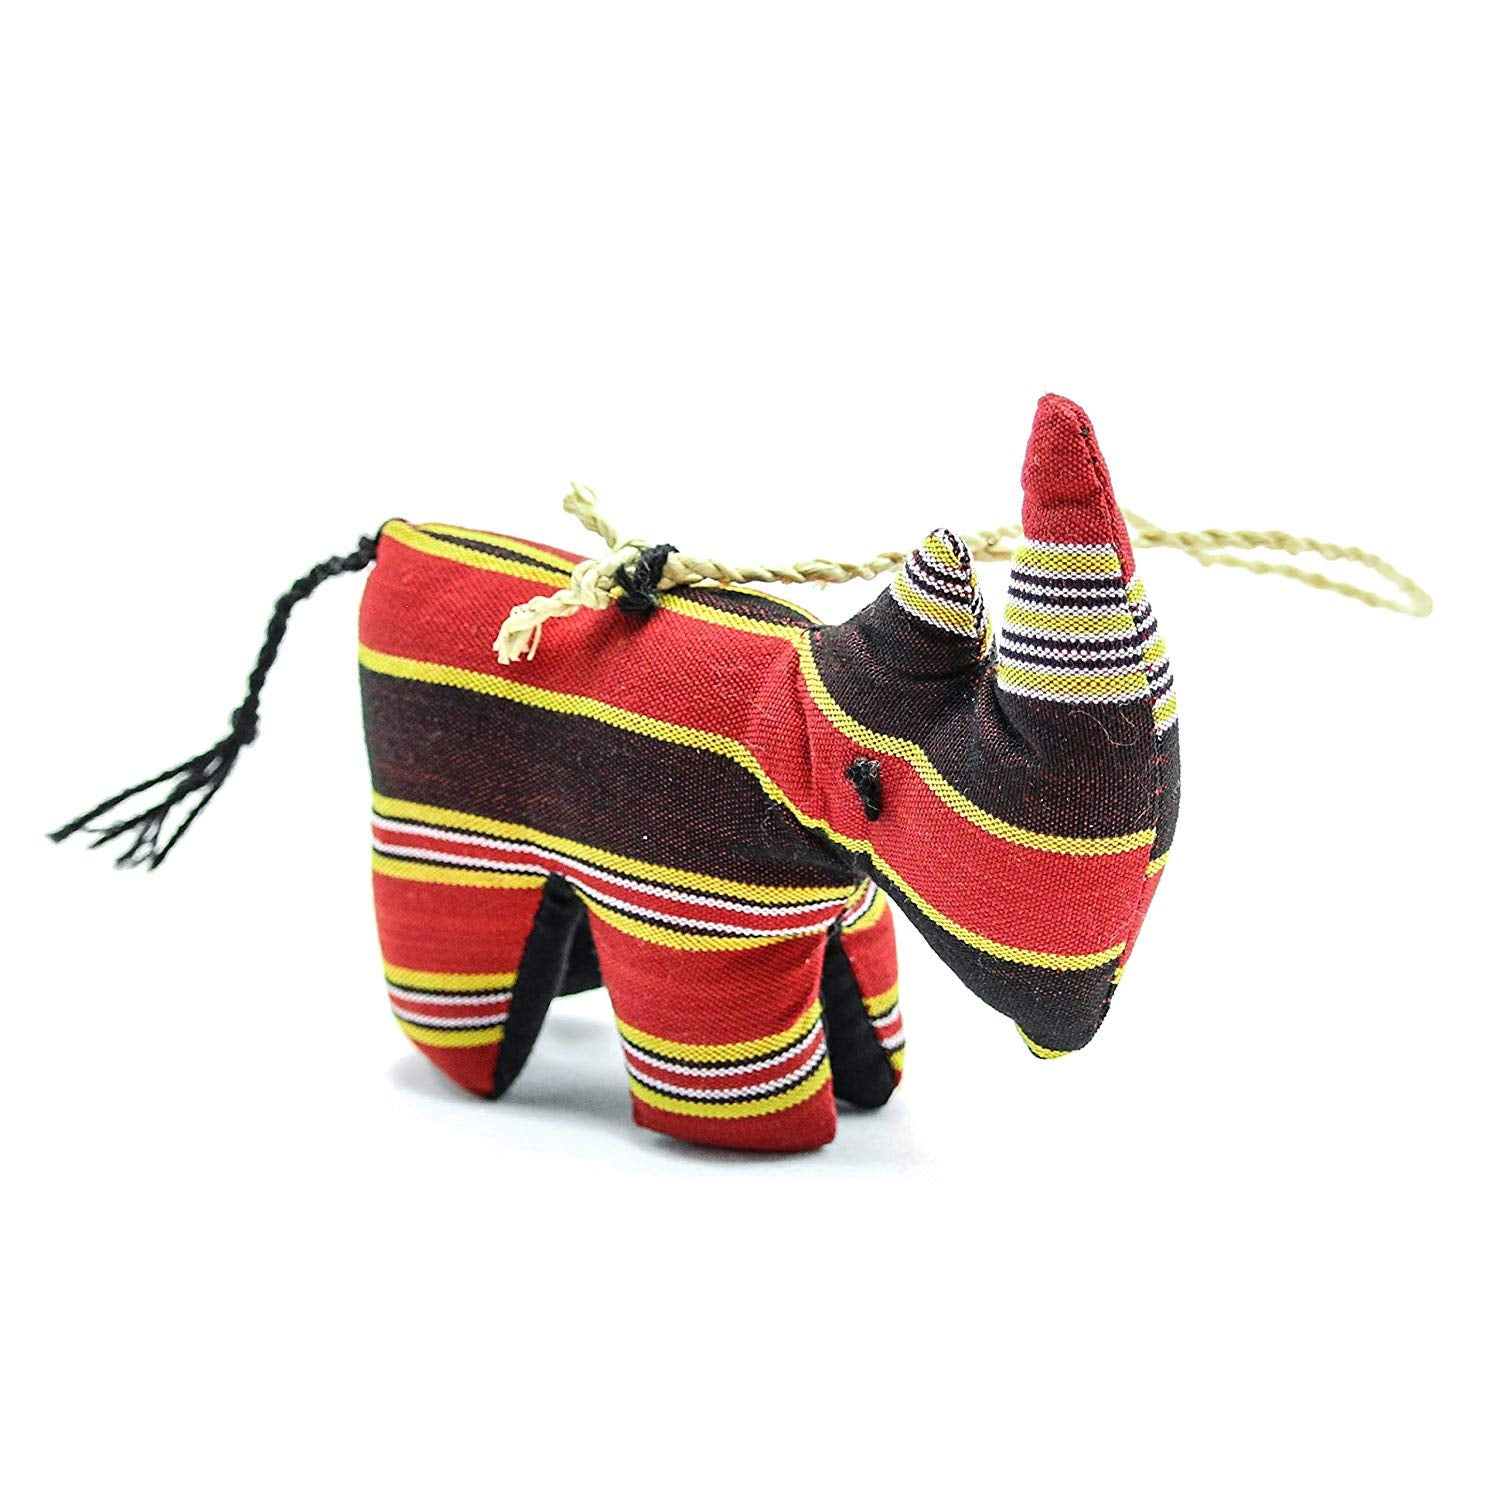 Stuffed Animal Ornament Set of 5 - Kikoy Red